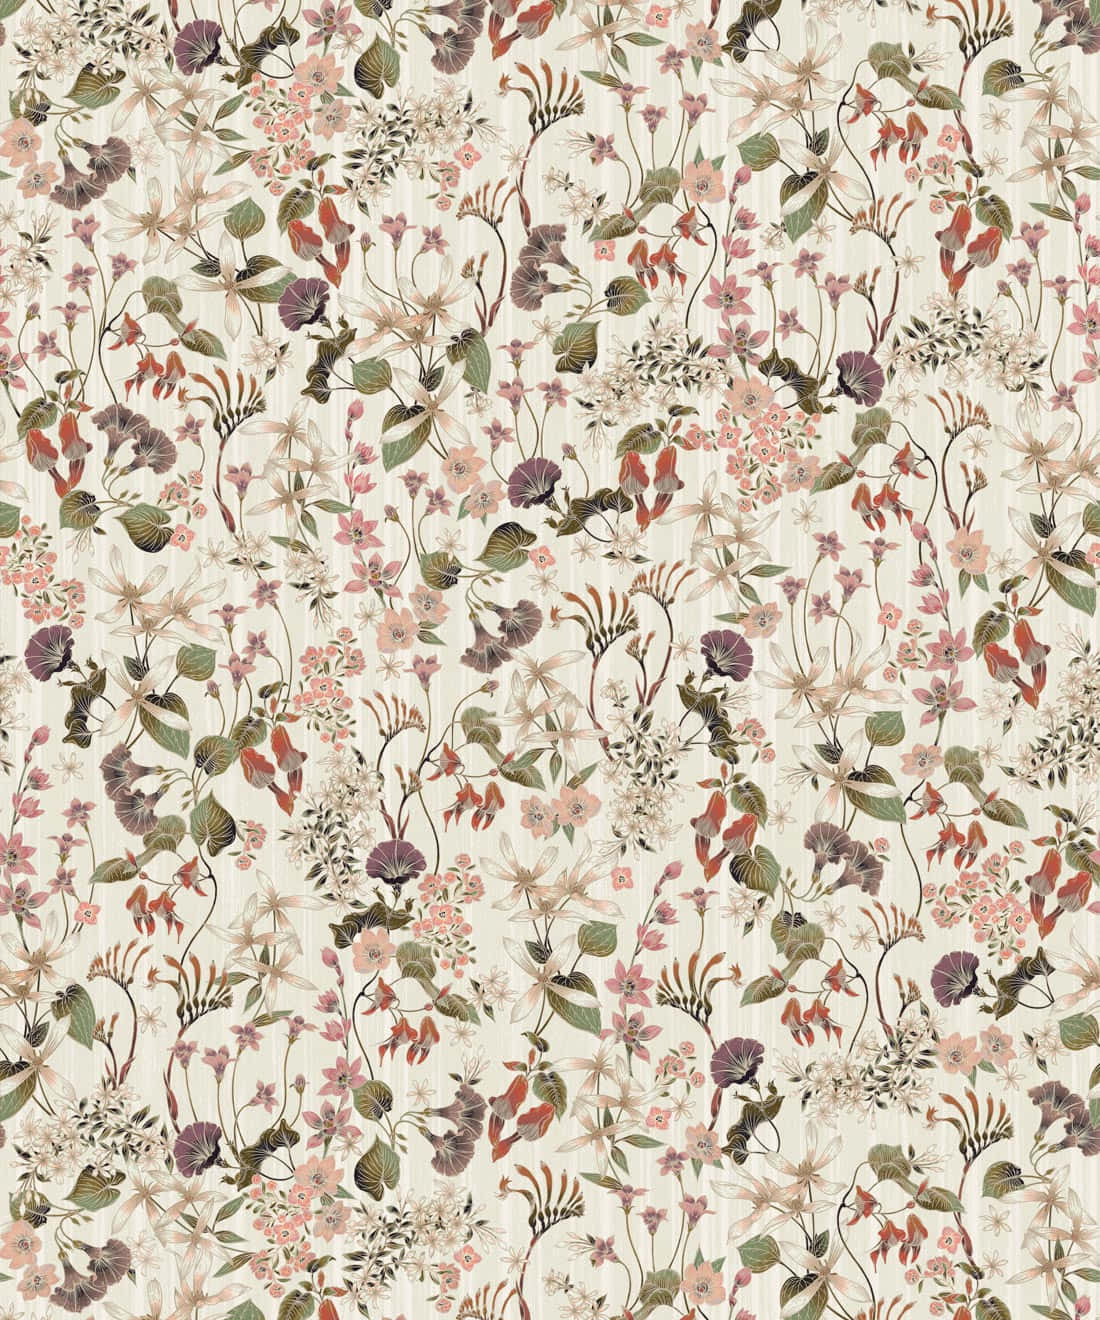 Beautifully designed vintage Floral pattern